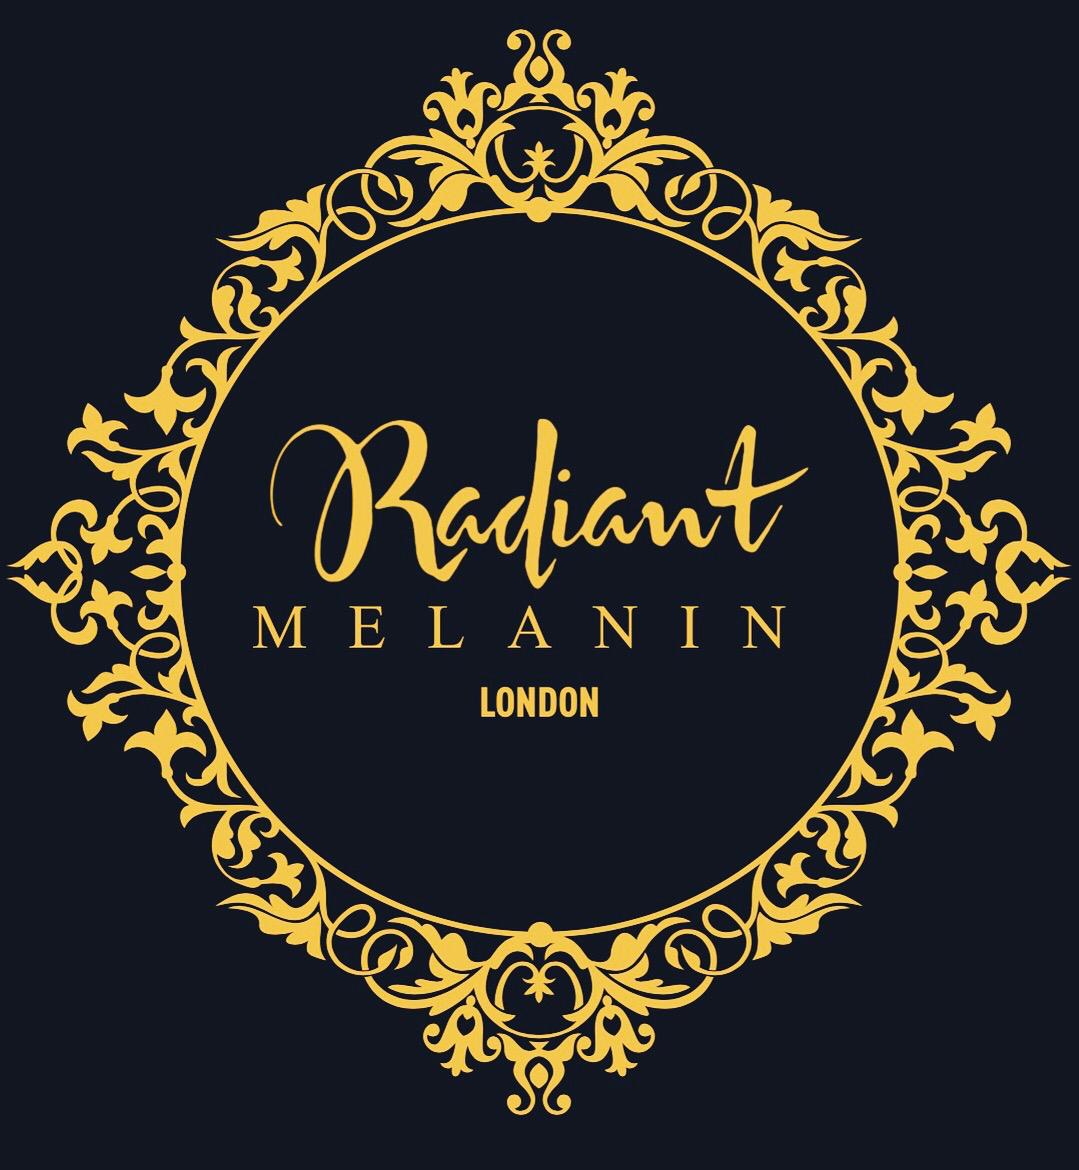 Radiant Melanin London Limited - Cosmetic Franchise Opportunity